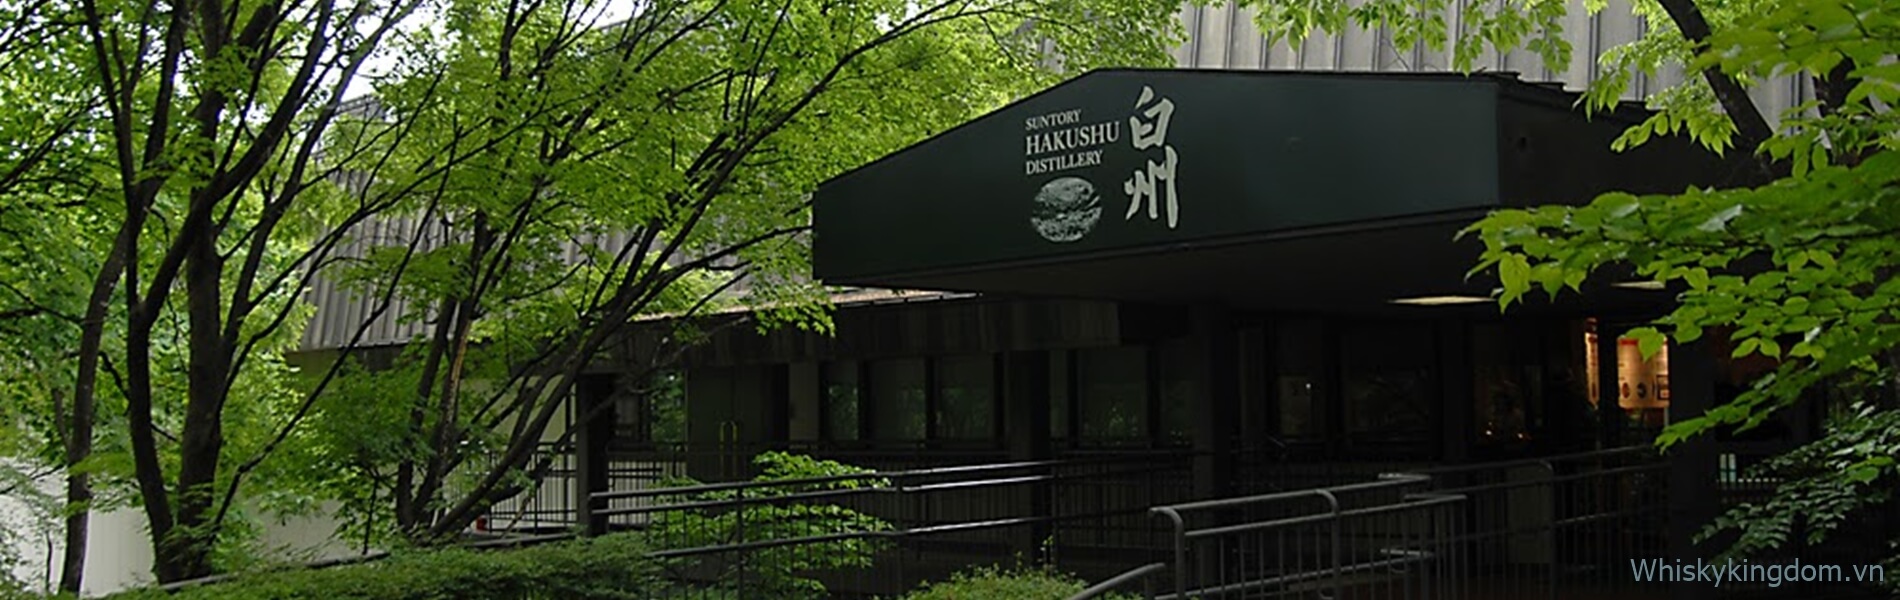 Suntory Hakushu Distillery